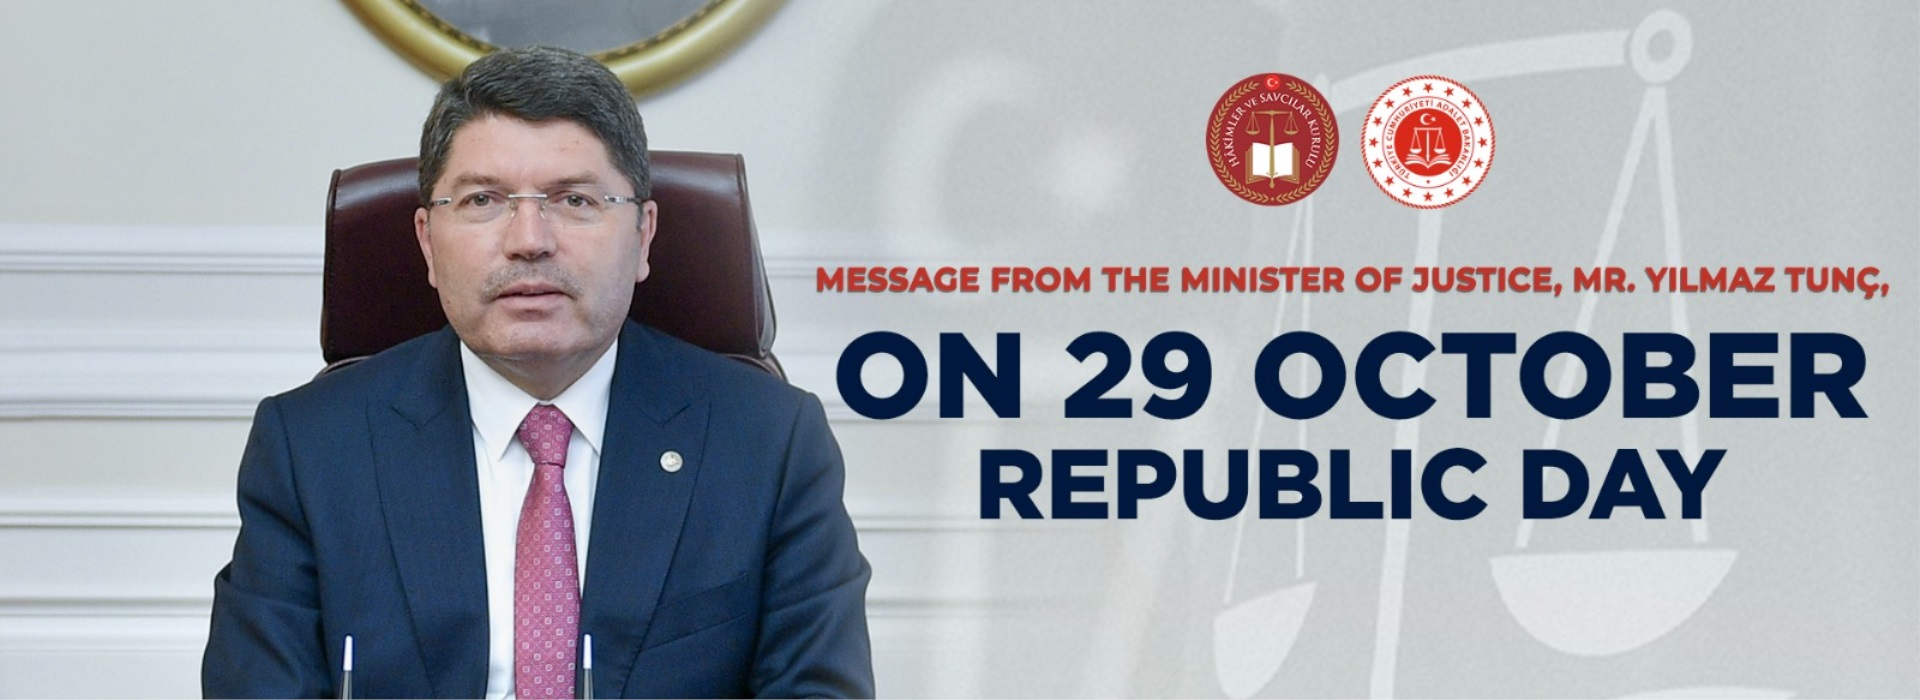 MESSAGE FROM THE MINISTER OF JUSTICE, MR. YILMAZ TUNÇ, ON 29 OCTOBER REPUBLIC DAY Duyuru Görseli